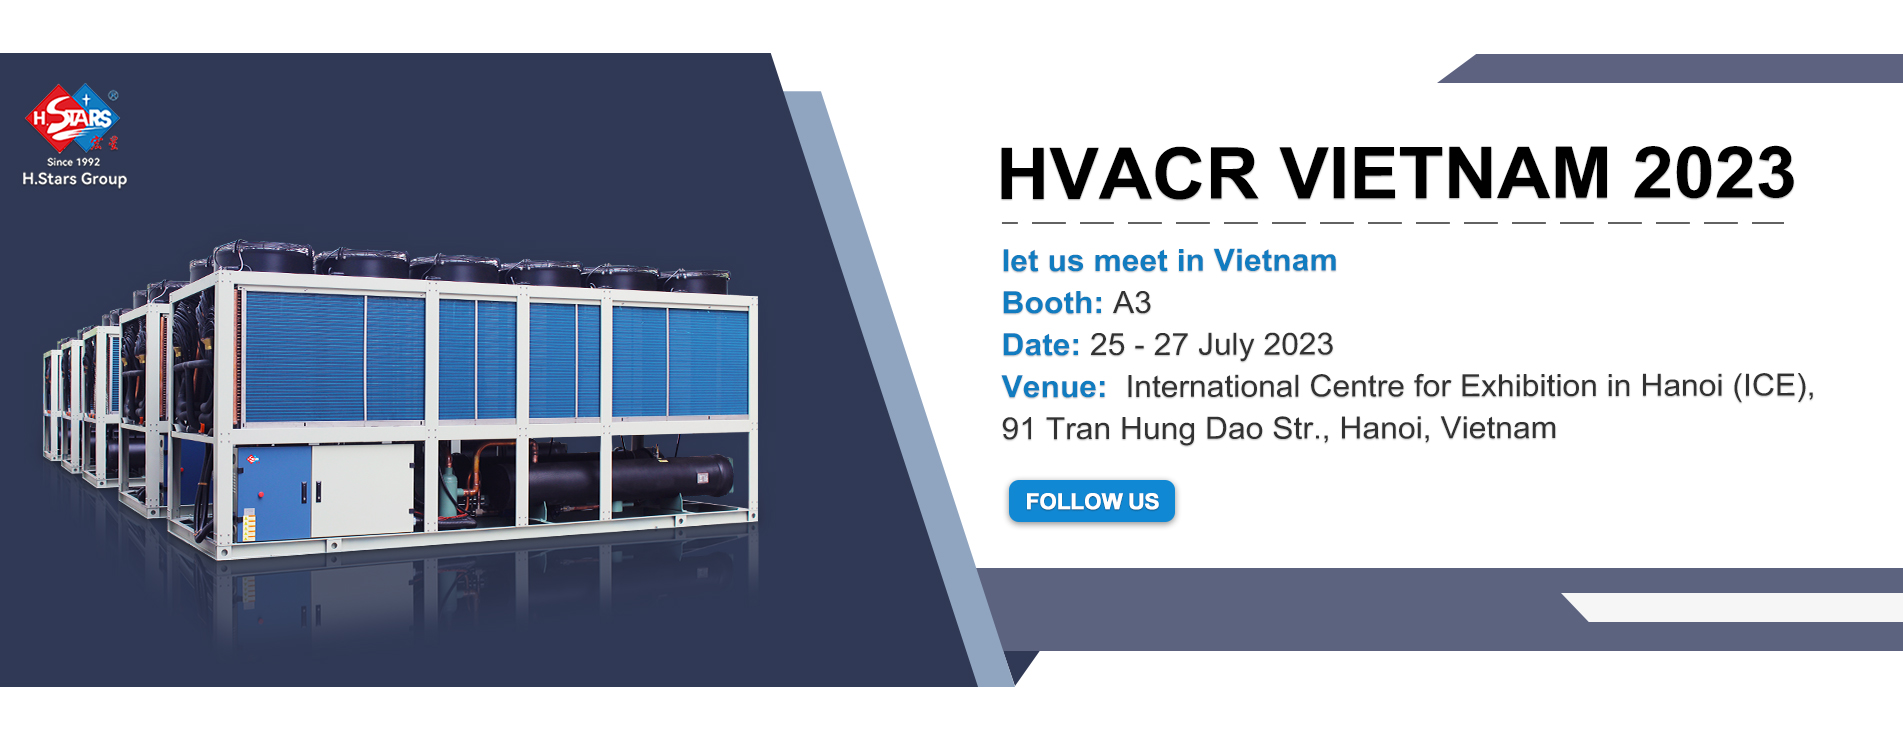 HVACR Vietnam 2023